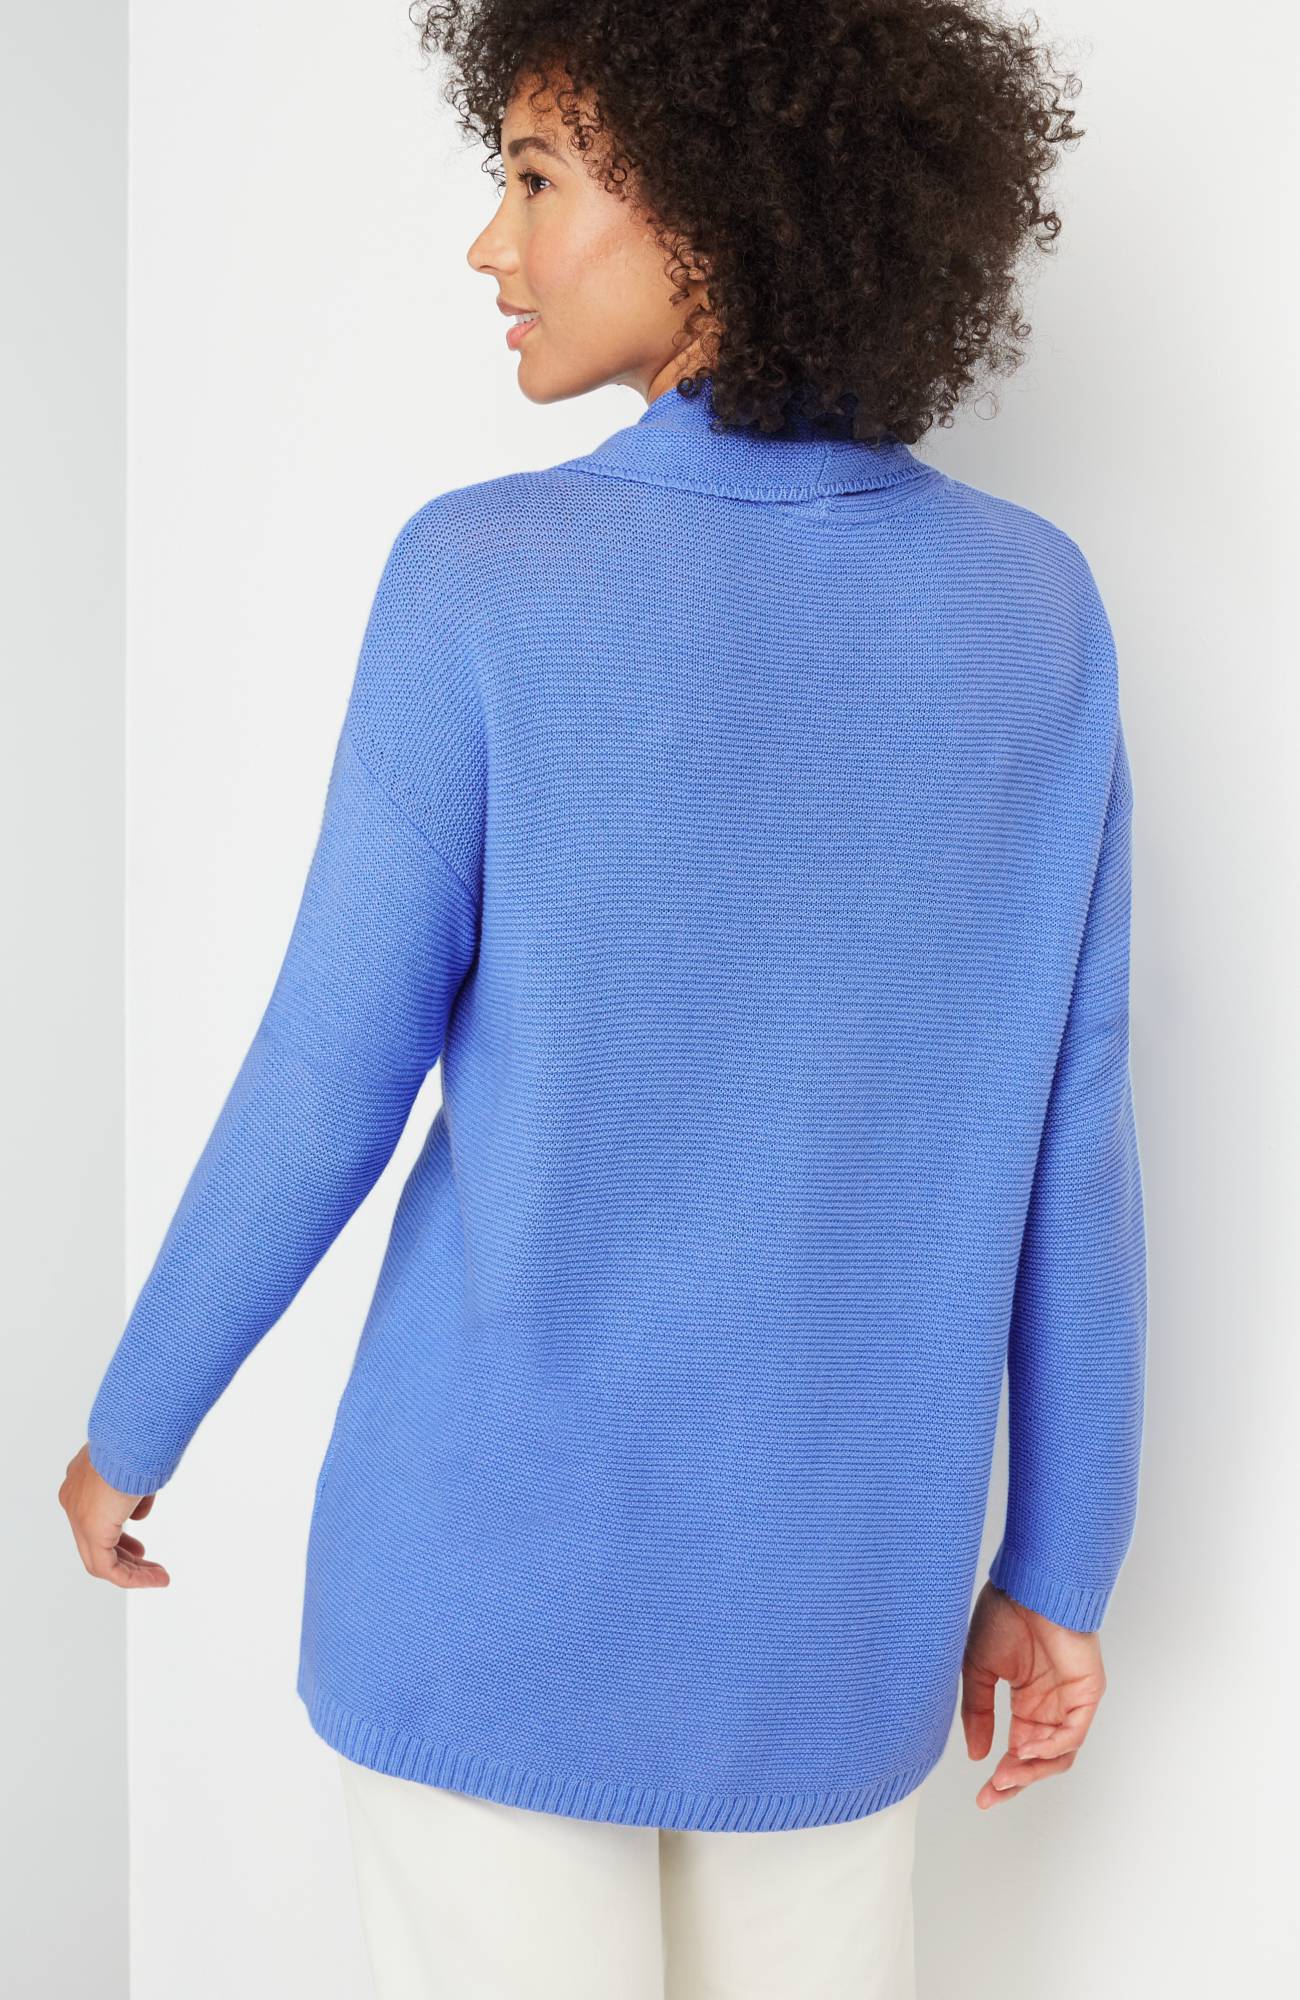 Textured Cowl-Neck Sweater